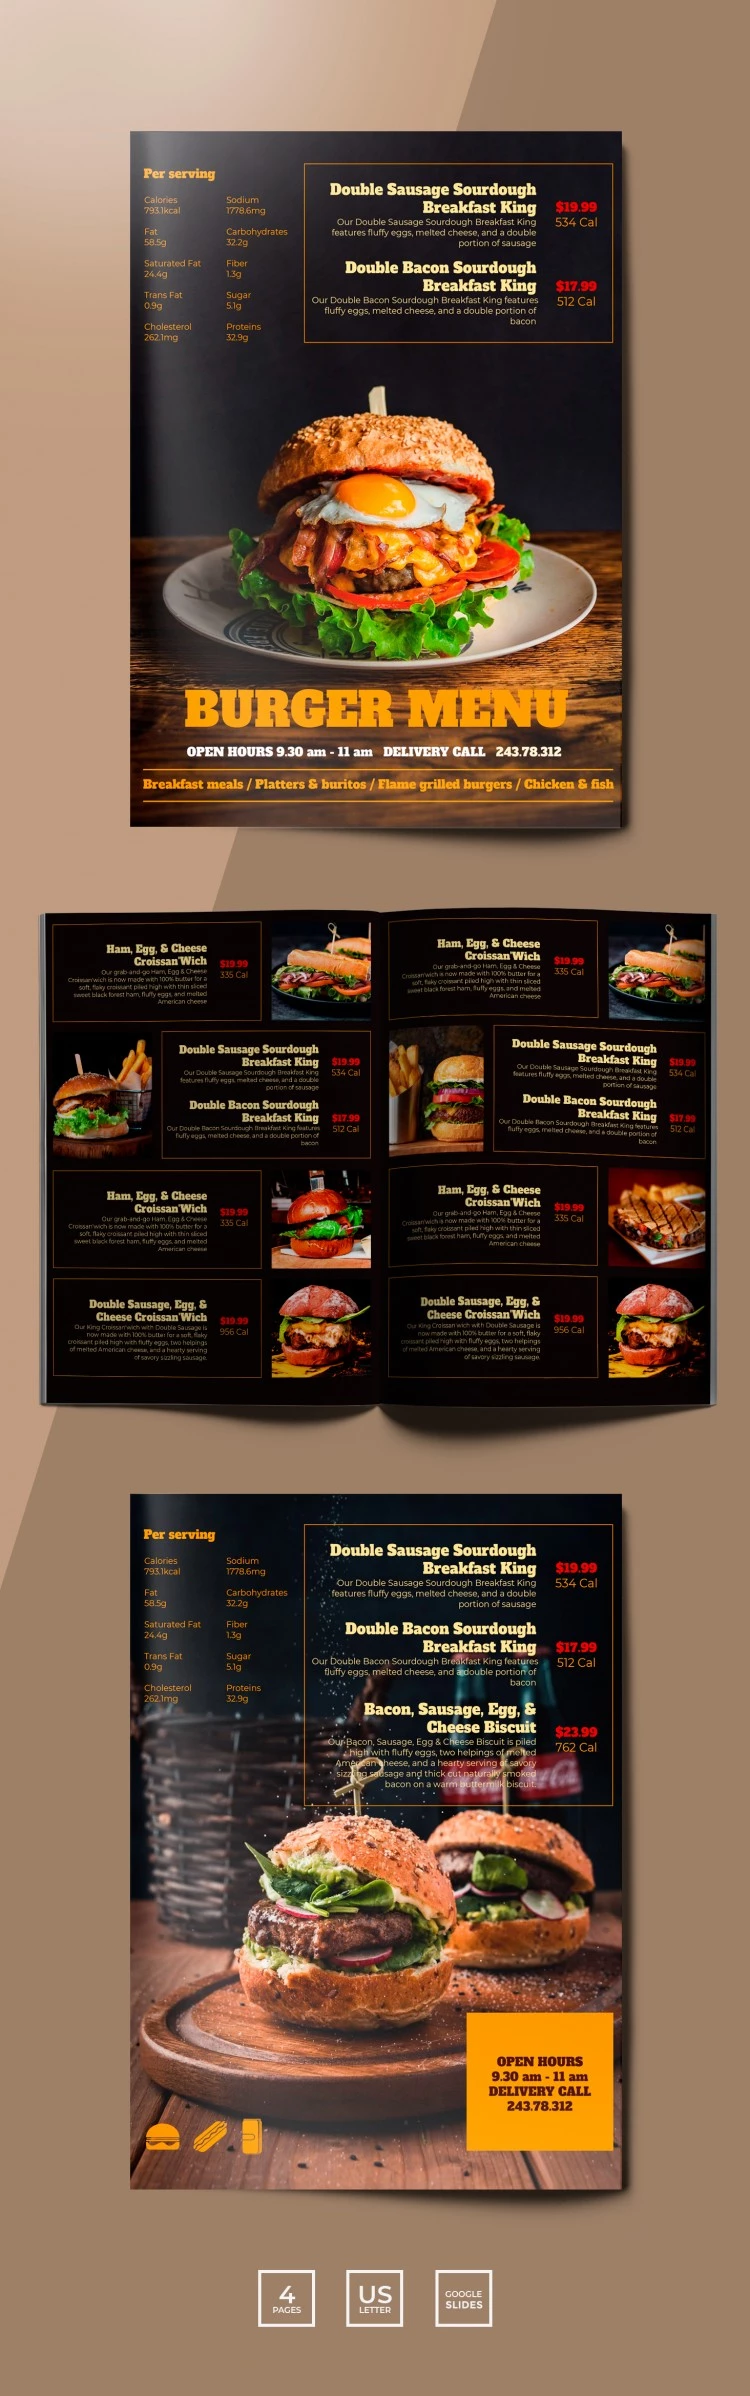 Menu Burger Ristorante - free Google Docs Template - 10061760